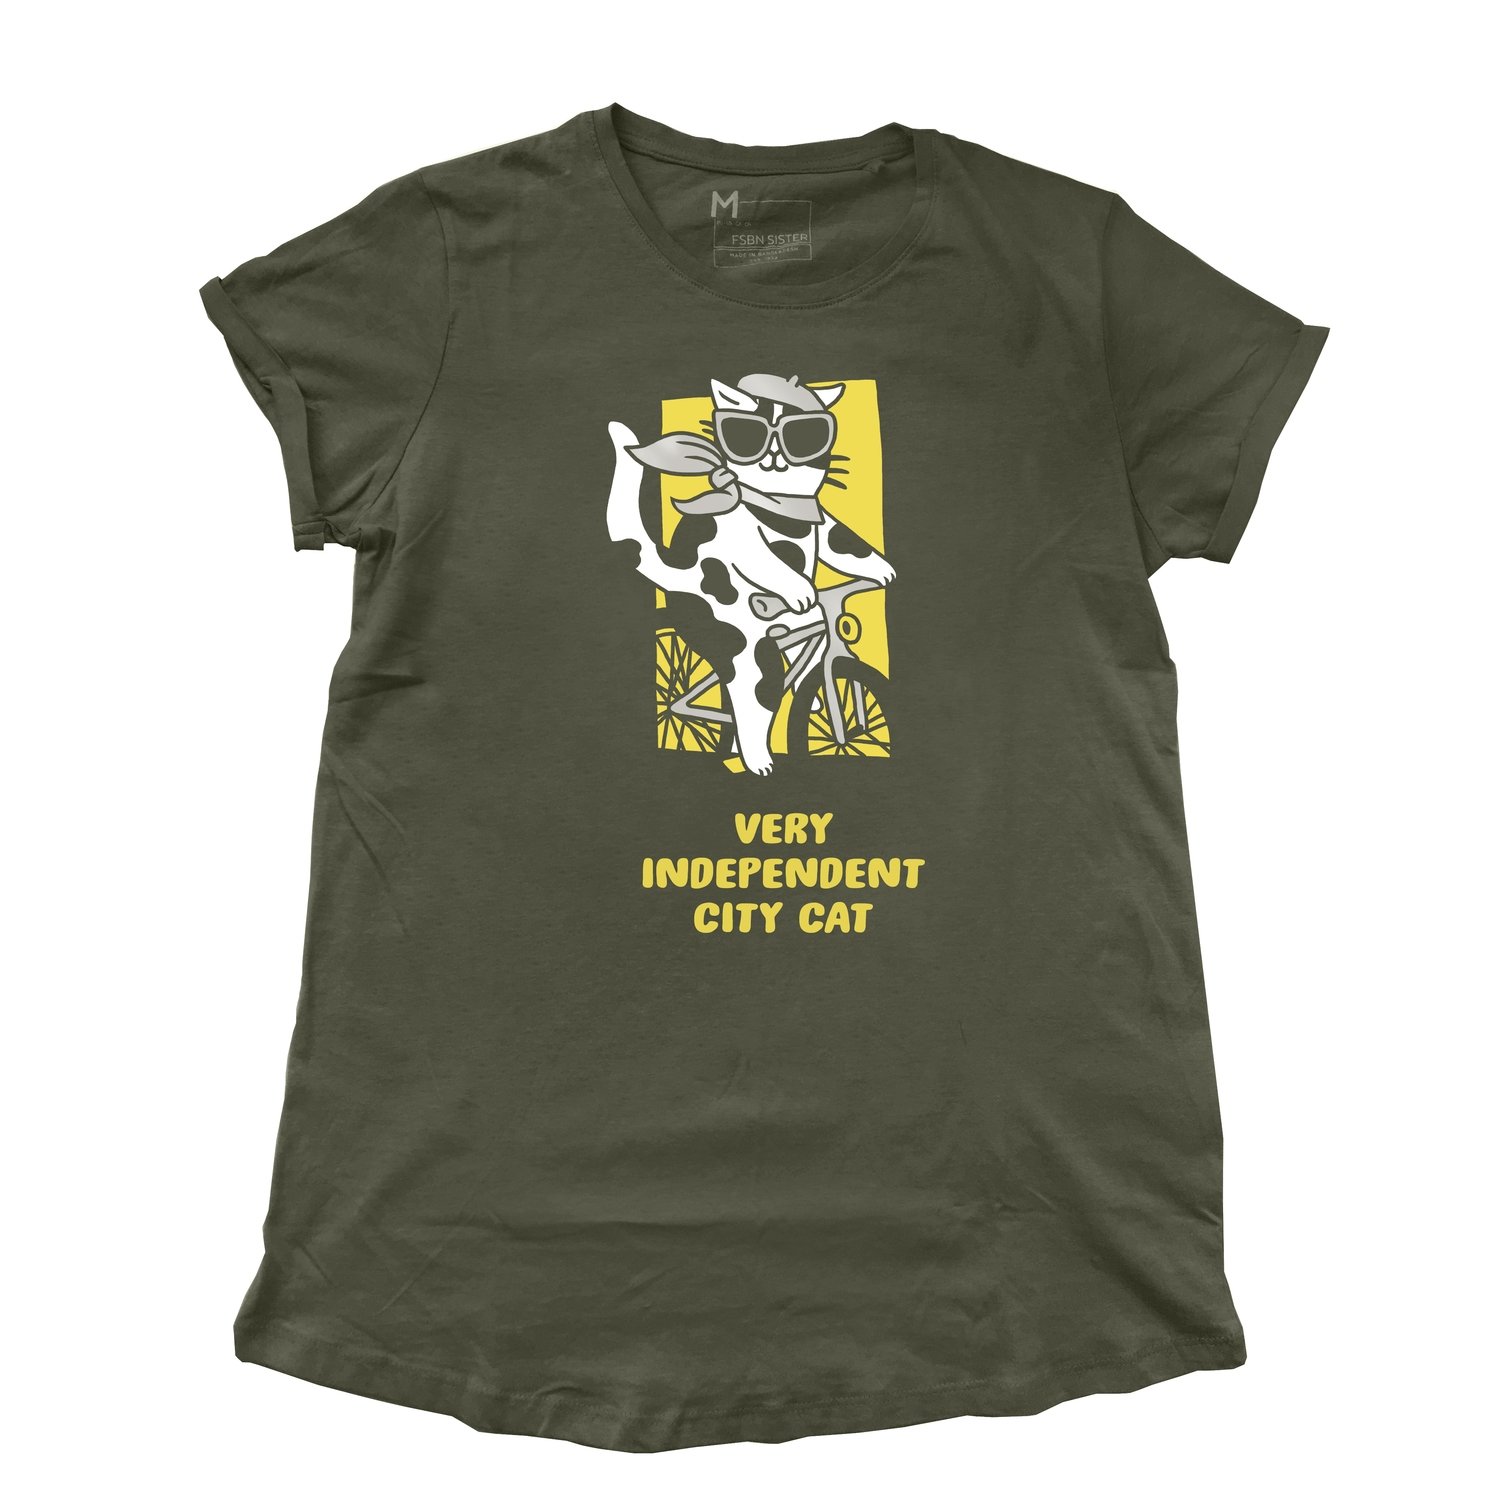 Shirt "City Cat" army